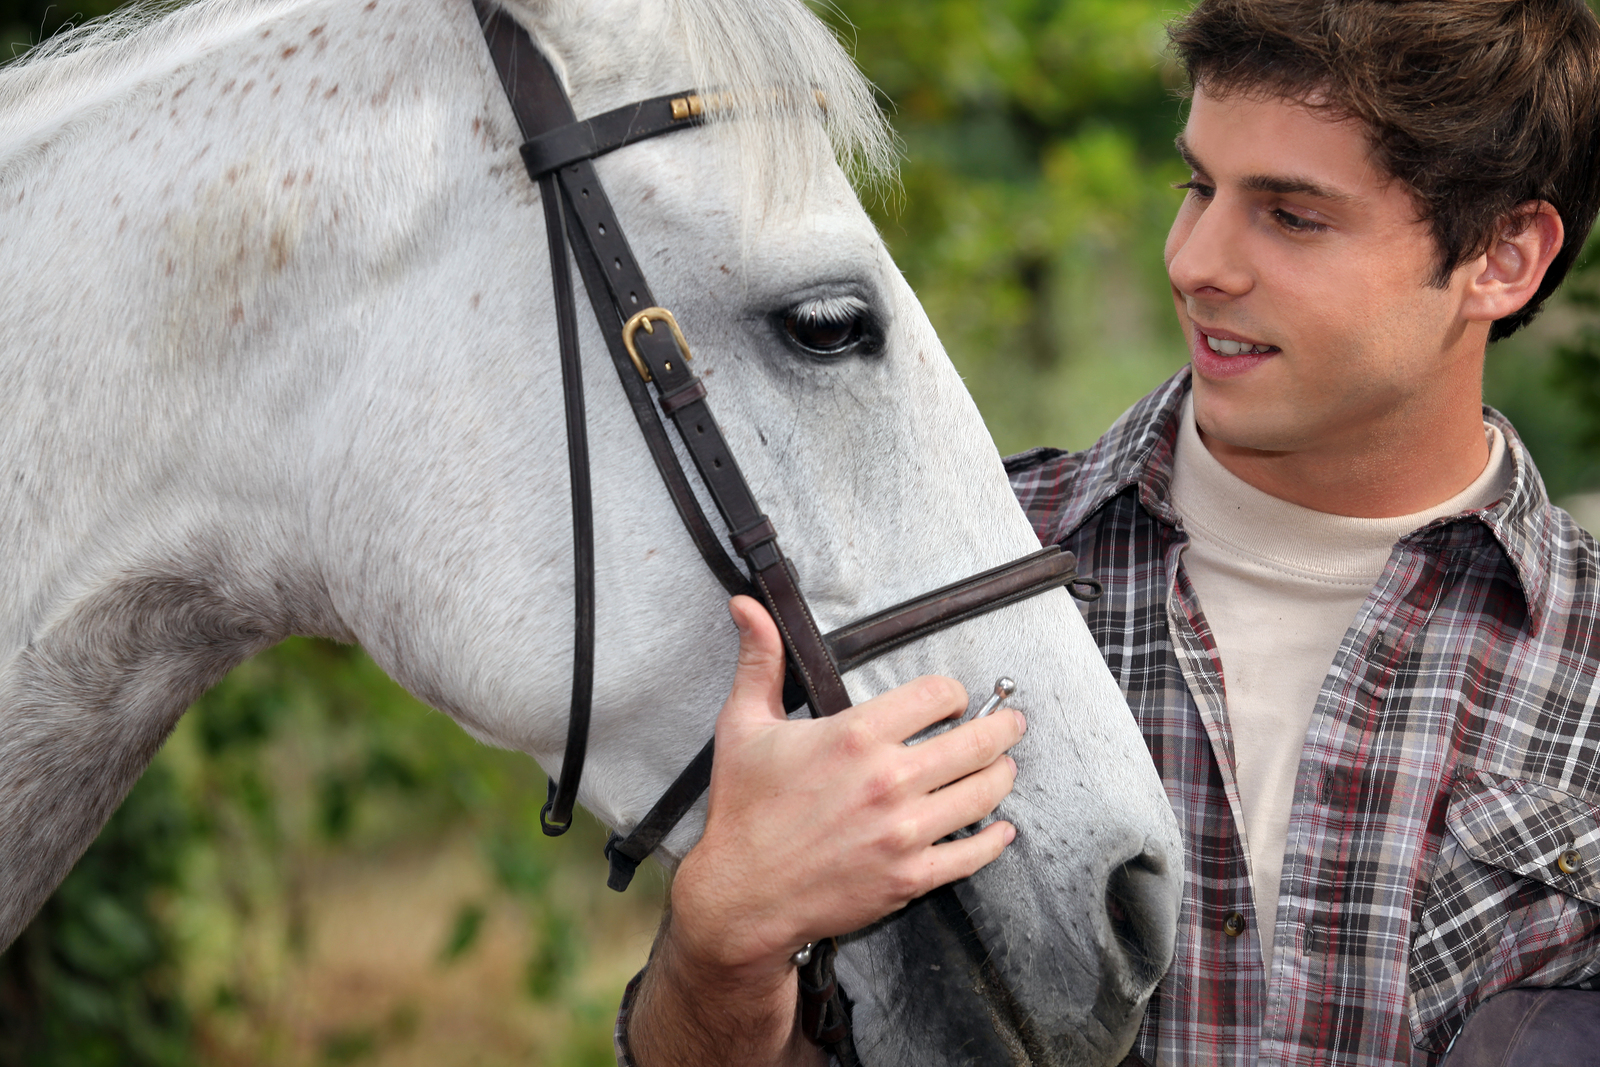 Teen stroking horse